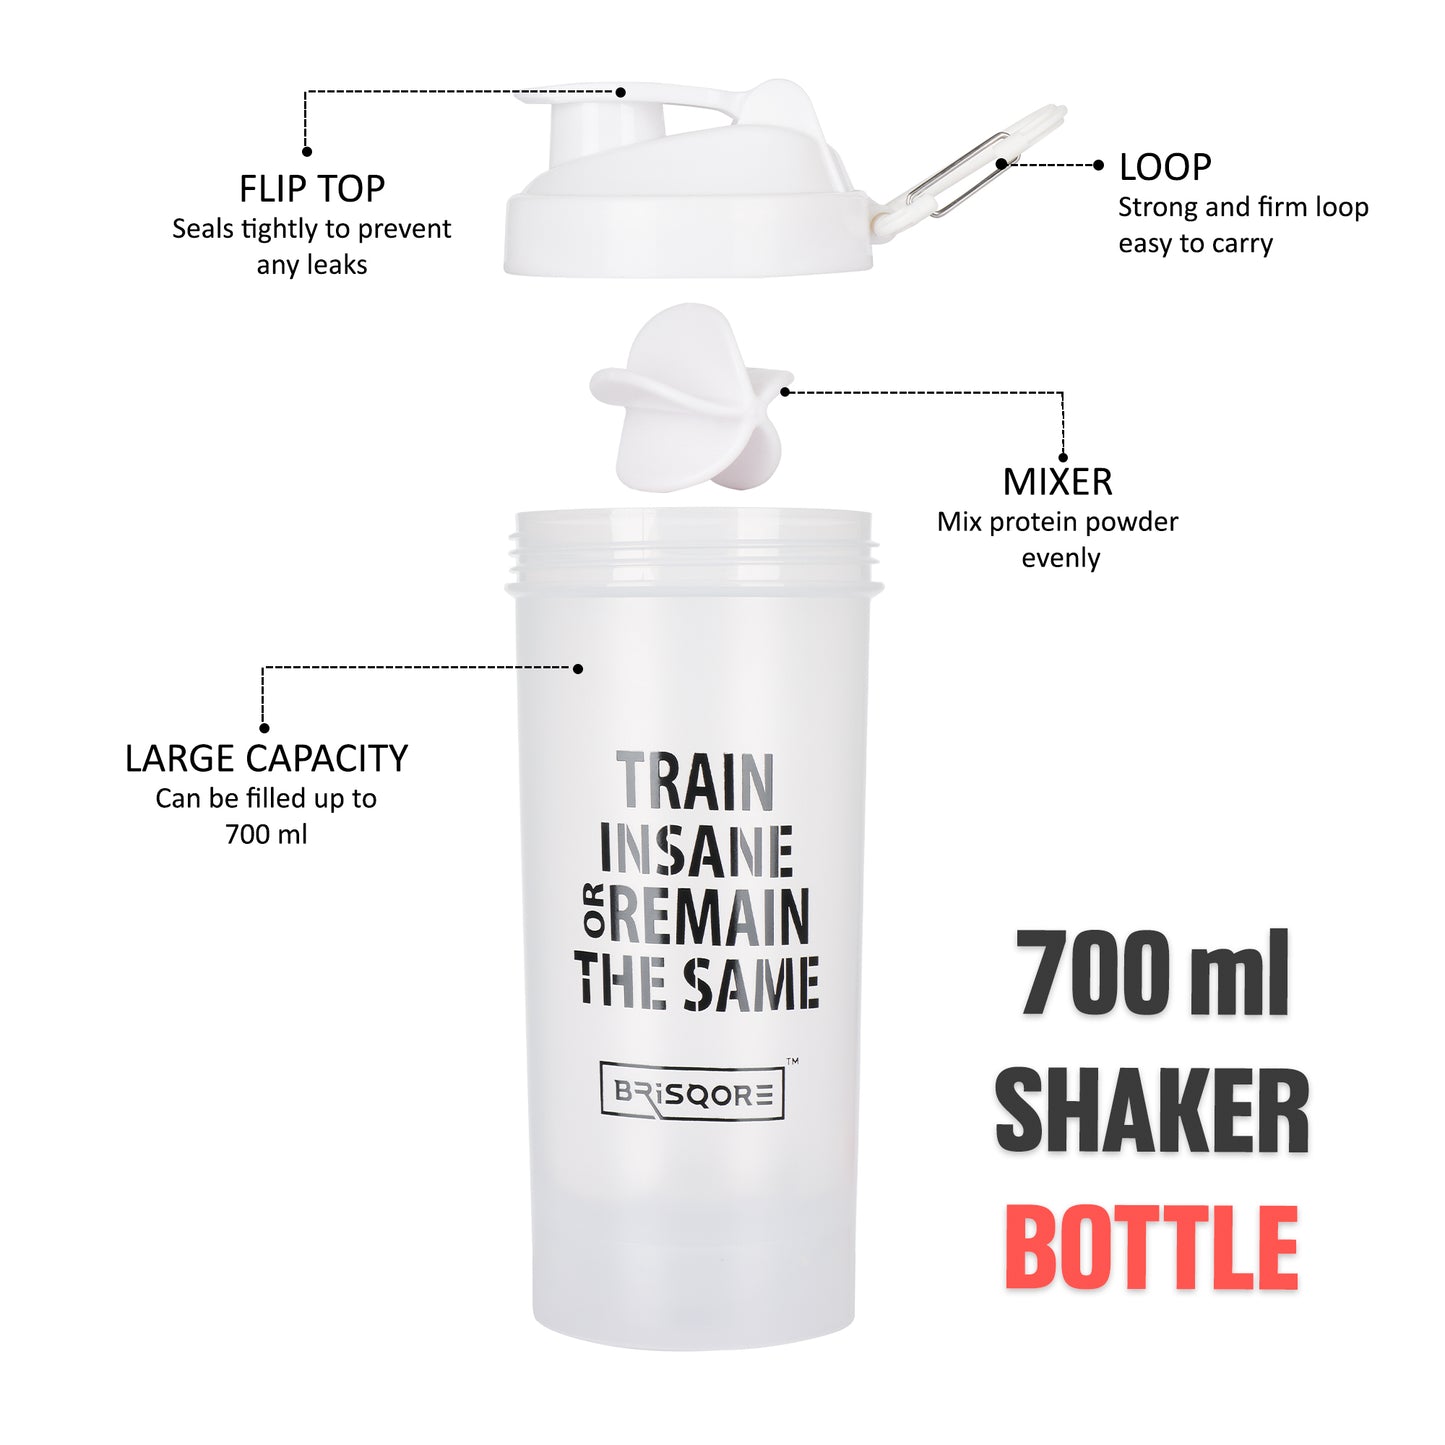 Brisqore Superior Leakproof Protein Shaker Bottle 700 ml, Black